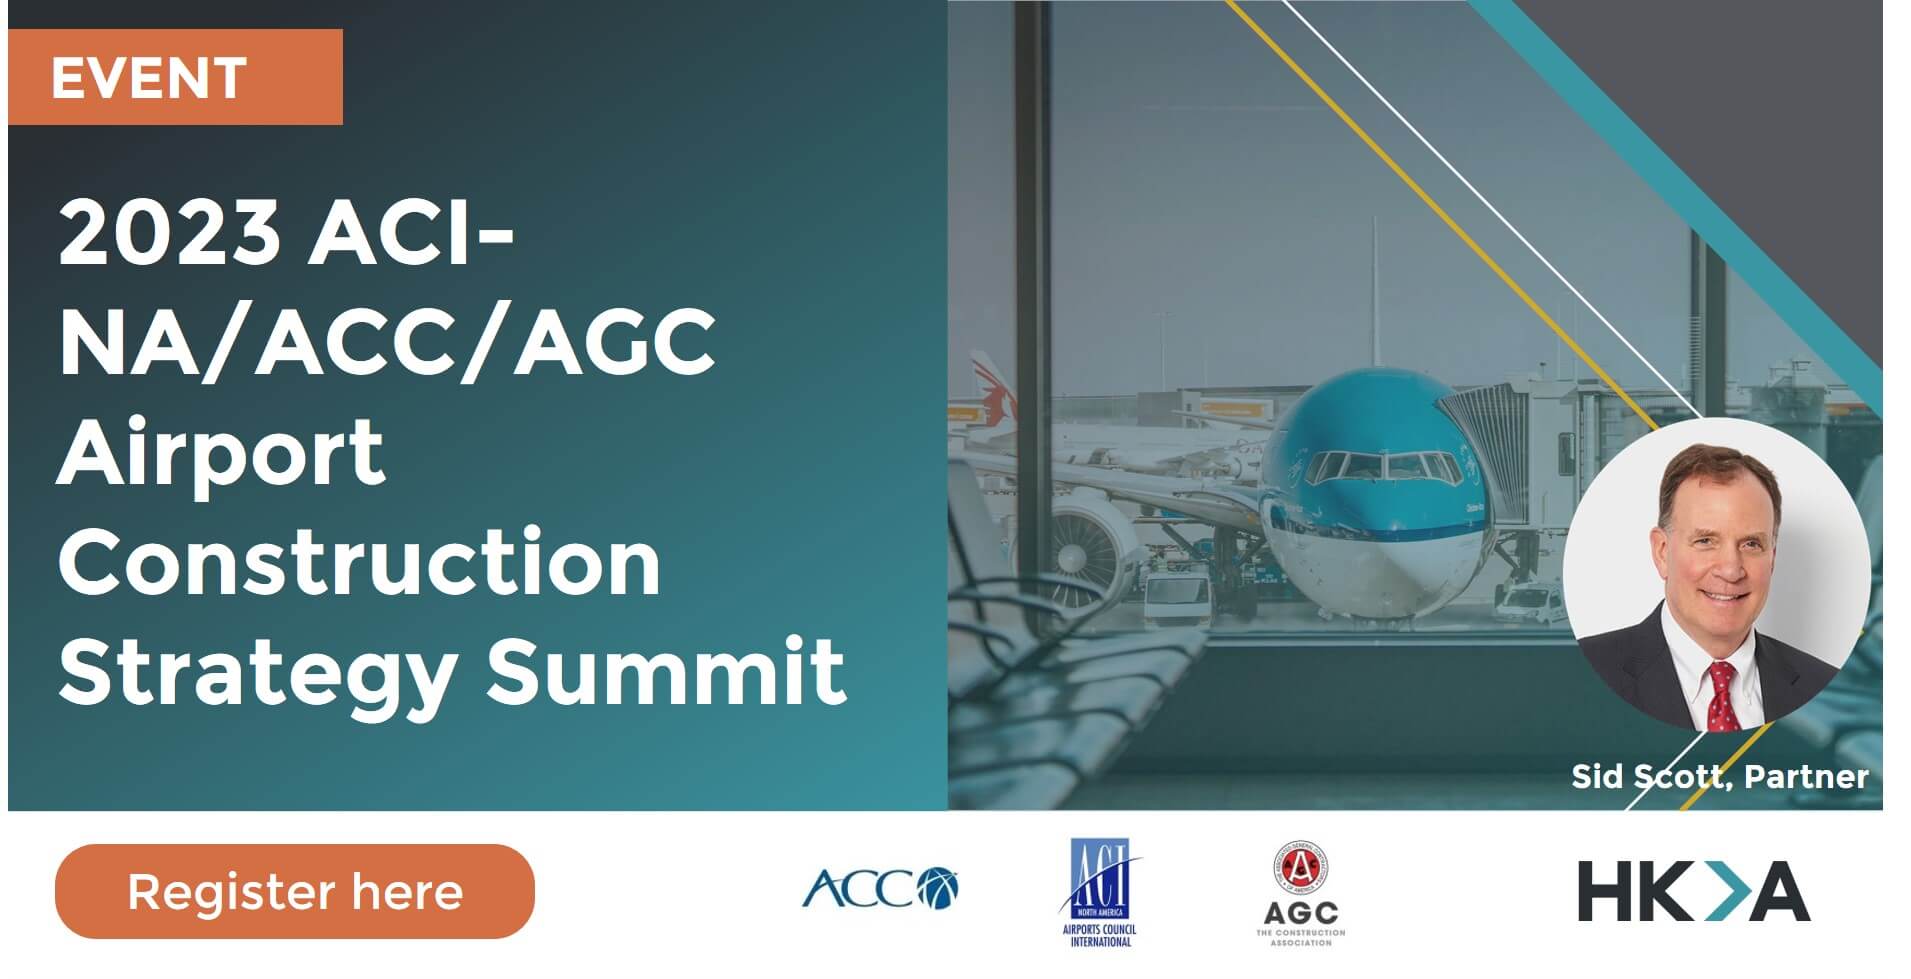 2023 ACINA/ACC/AGC Airport Construction Strategy Summit HKA